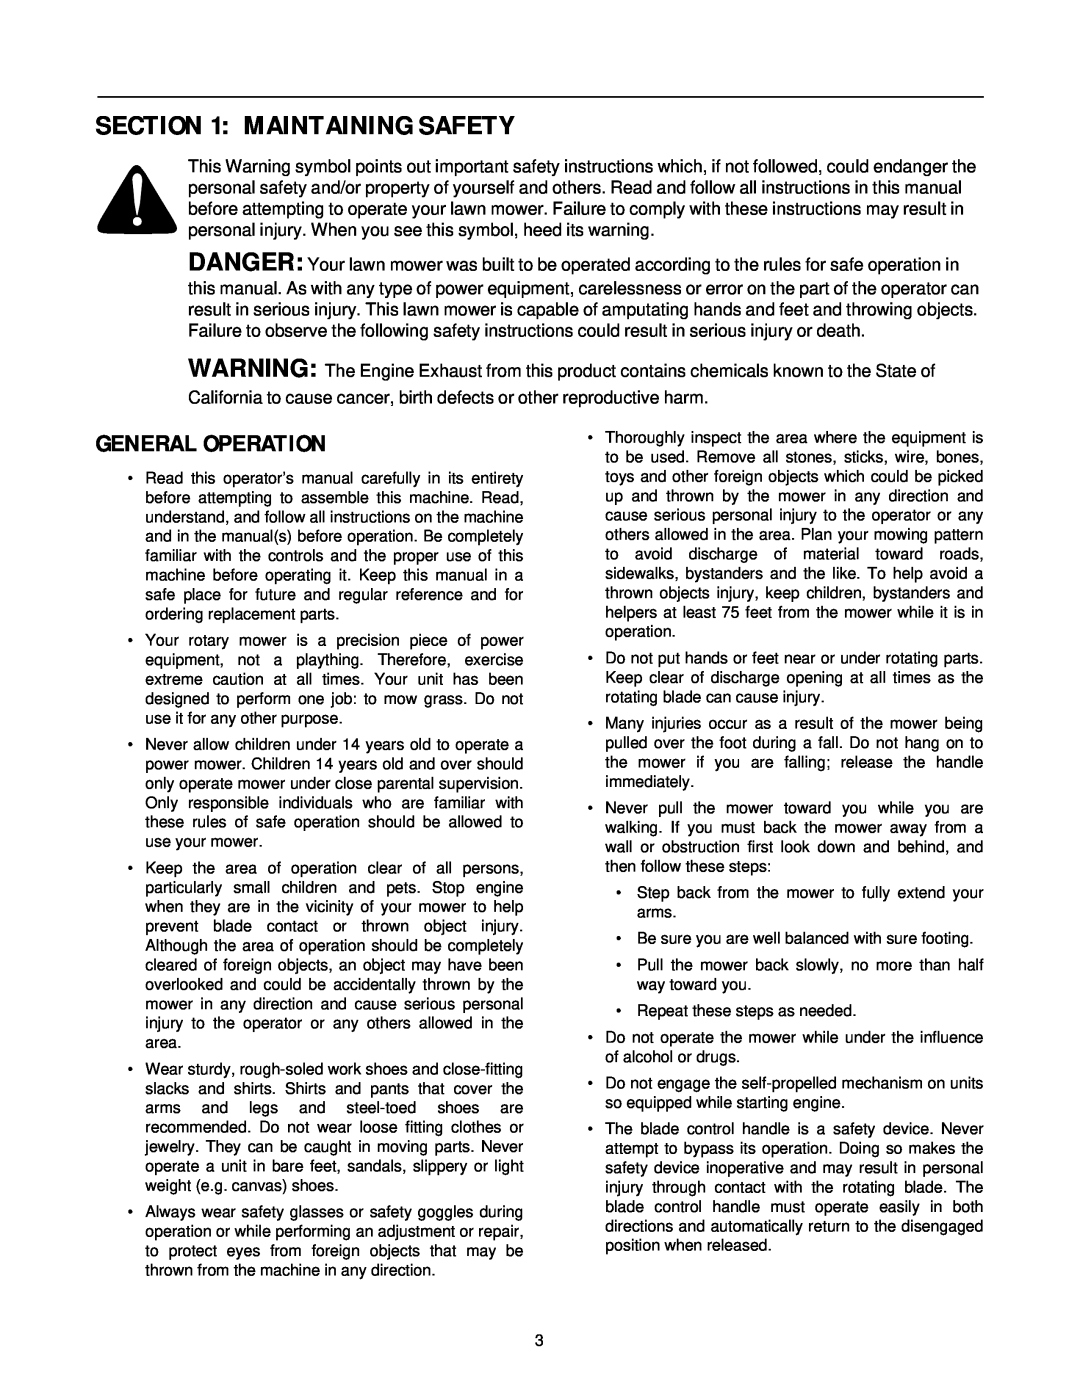 MTD 500 Thru 519 manual Maintaining Safety, General Operation 